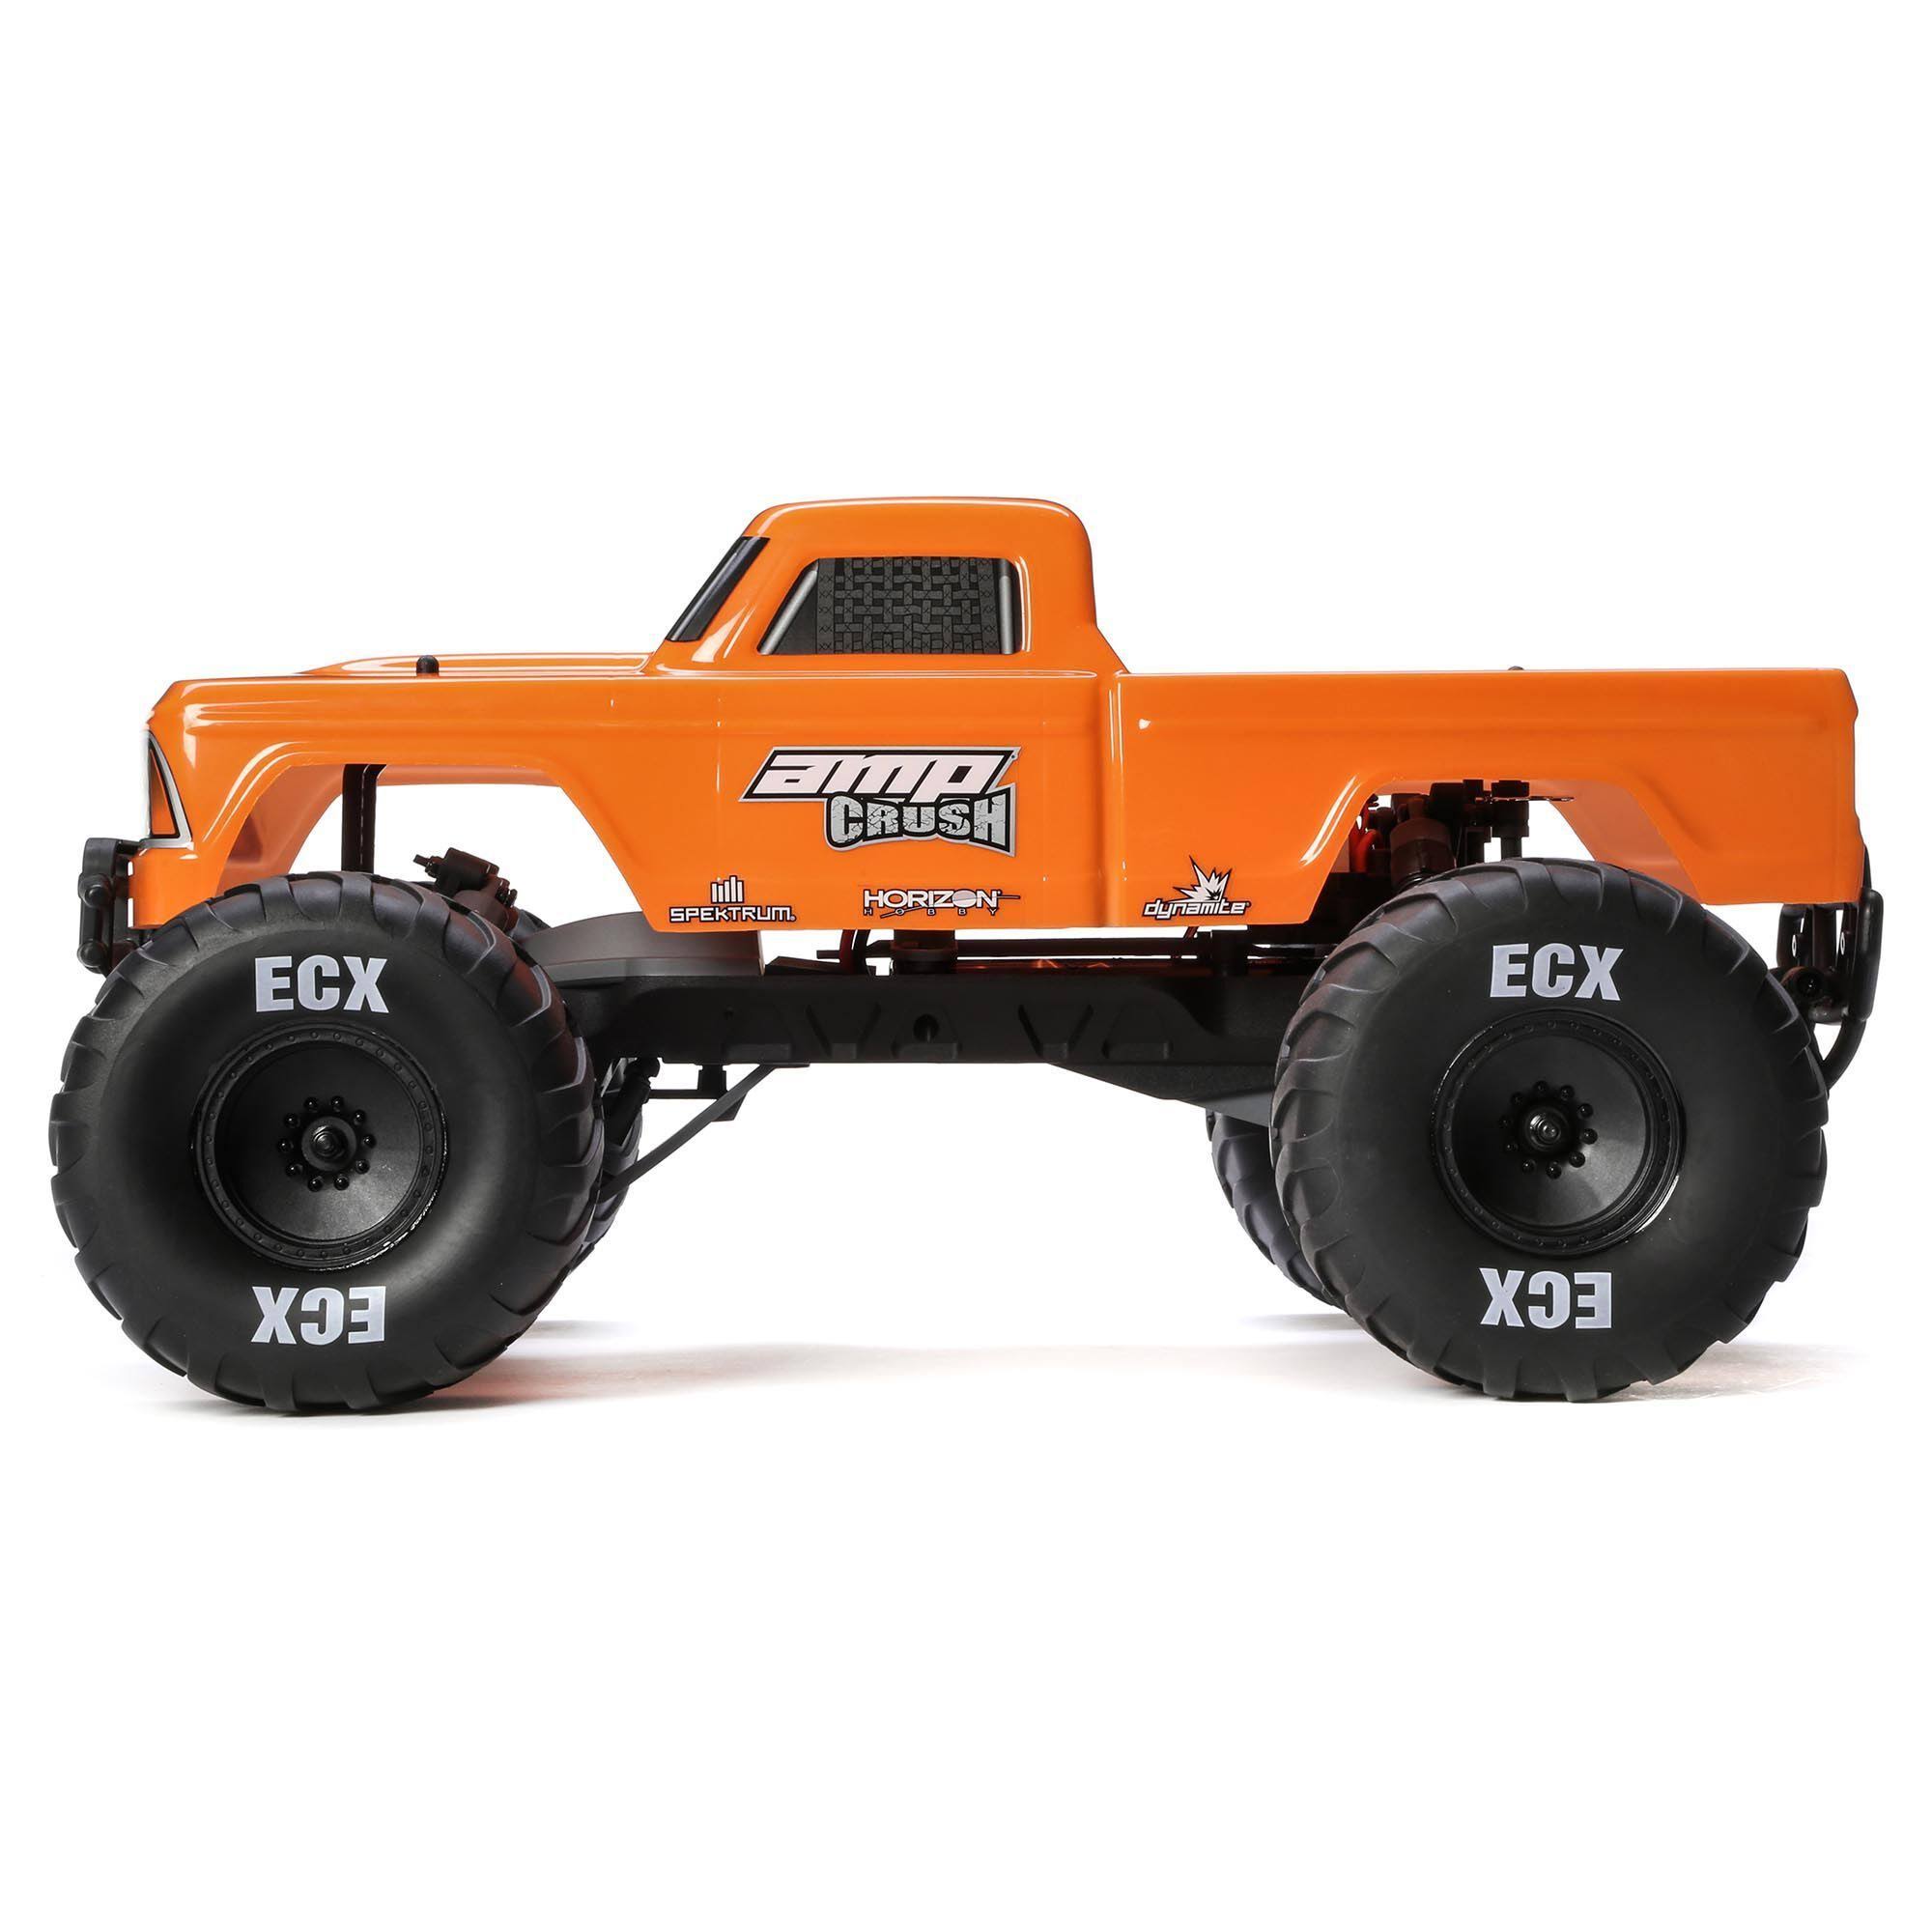 ECX 1/10 Amp Crush Monster Truck, 2WD RTR Orange